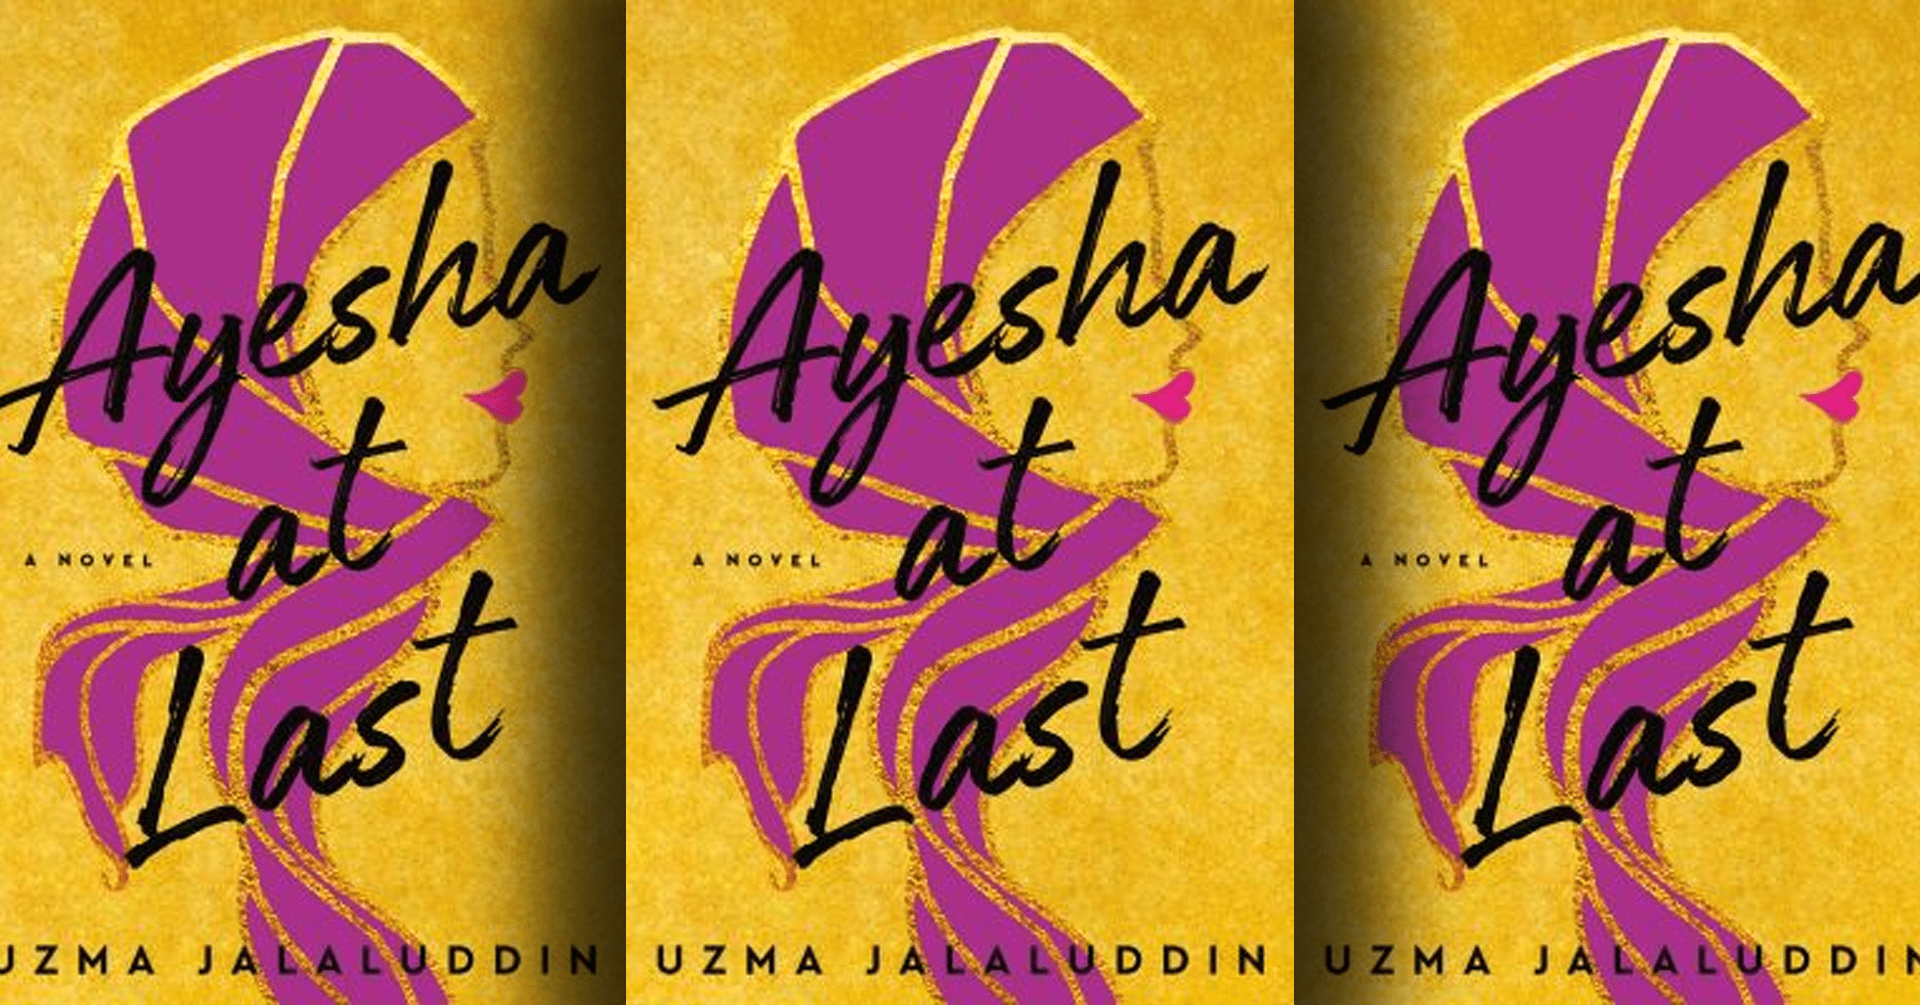 Ayesha at Last by Uzma Jalaluddin (book cover)